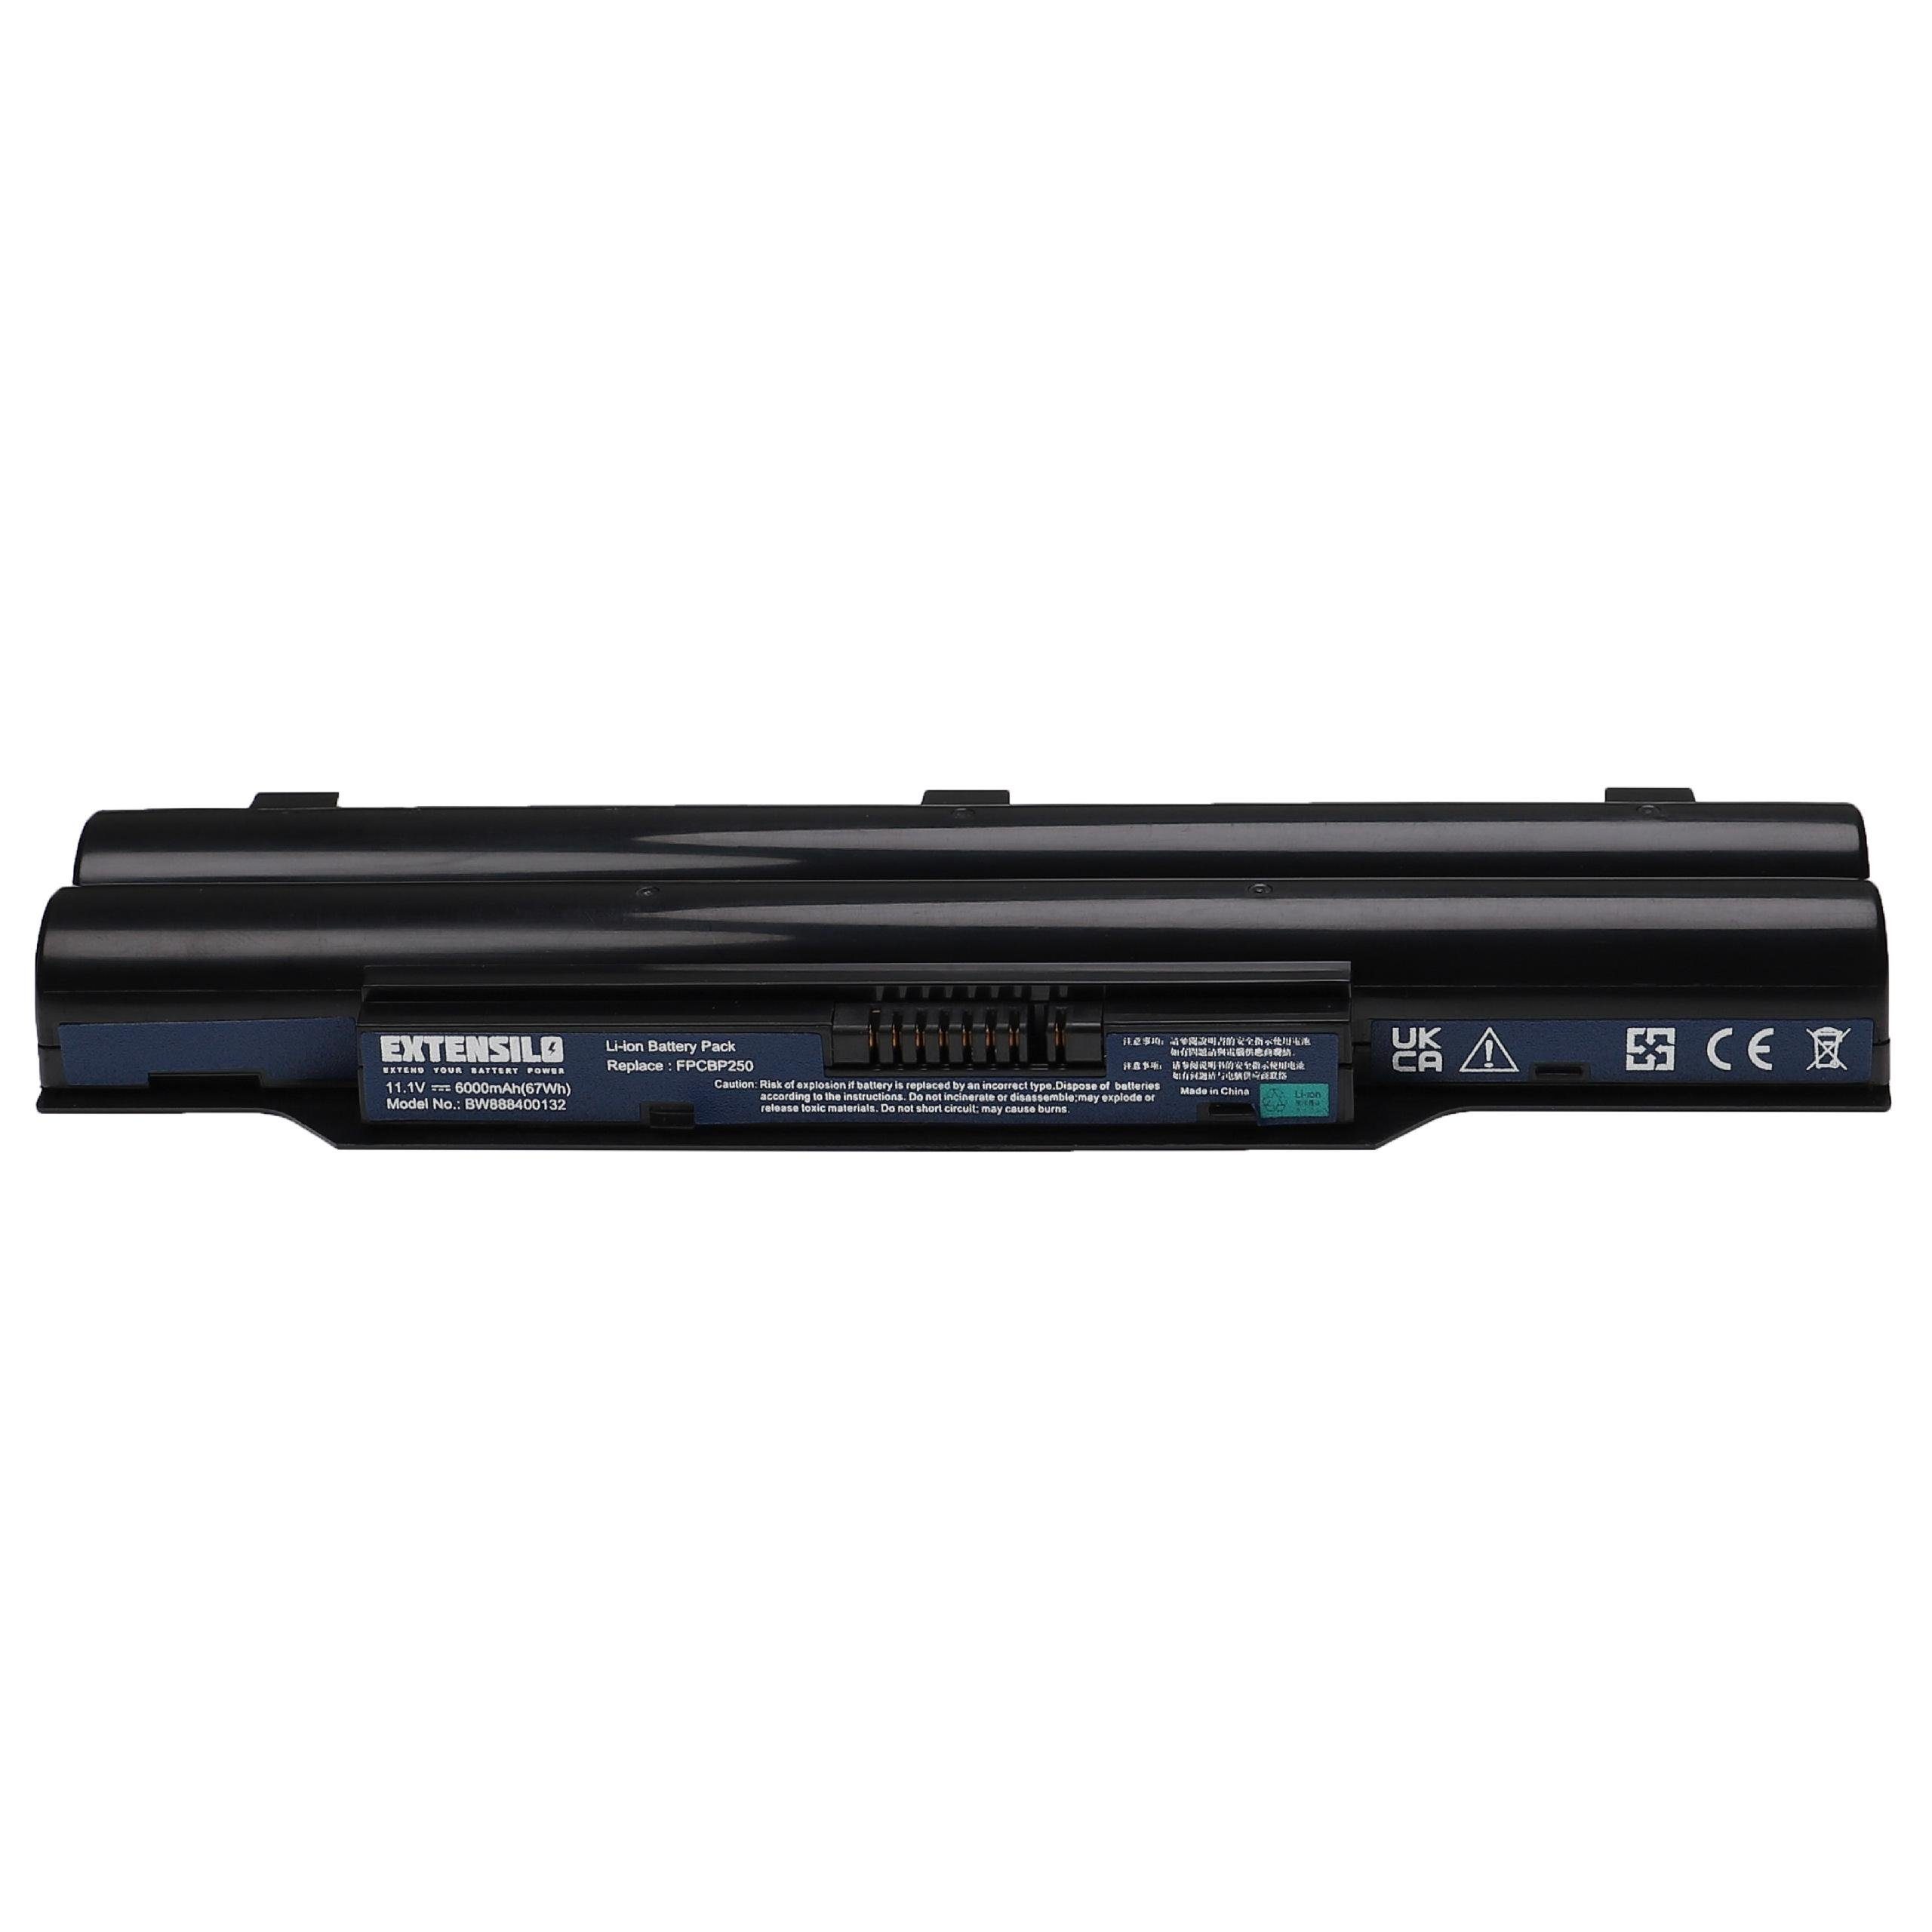 Extensilo kompatibel mit Fujitsu Siemens LifeBook PH50/E, PH521, LH701A, PH50/C Laptop-Akku Li-Ion 6000 mAh (11,1 V)